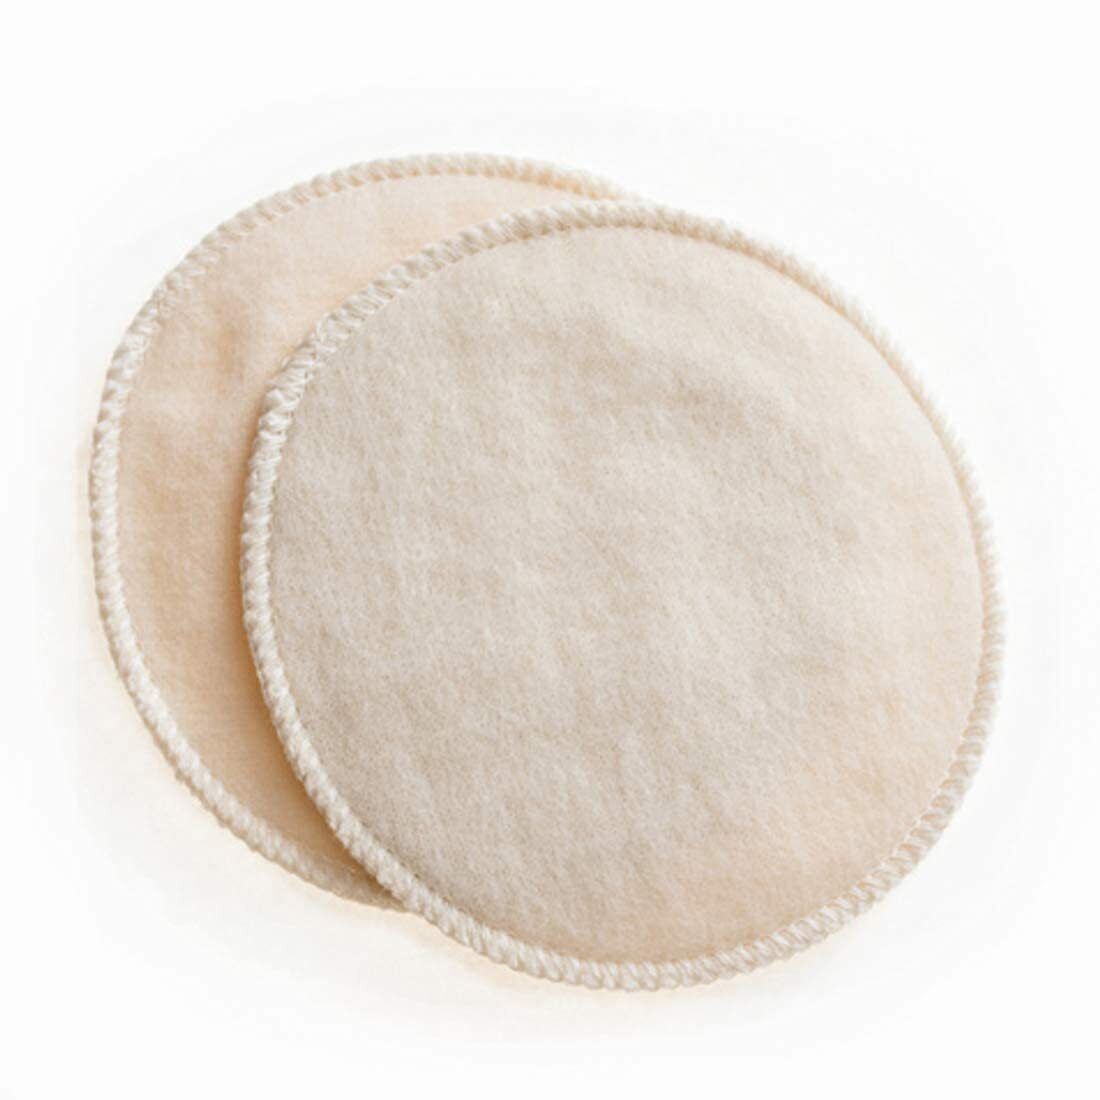 Lanacare 100% Merino Wool Breast Pads Nursing Breastfeeding Reusable Washable